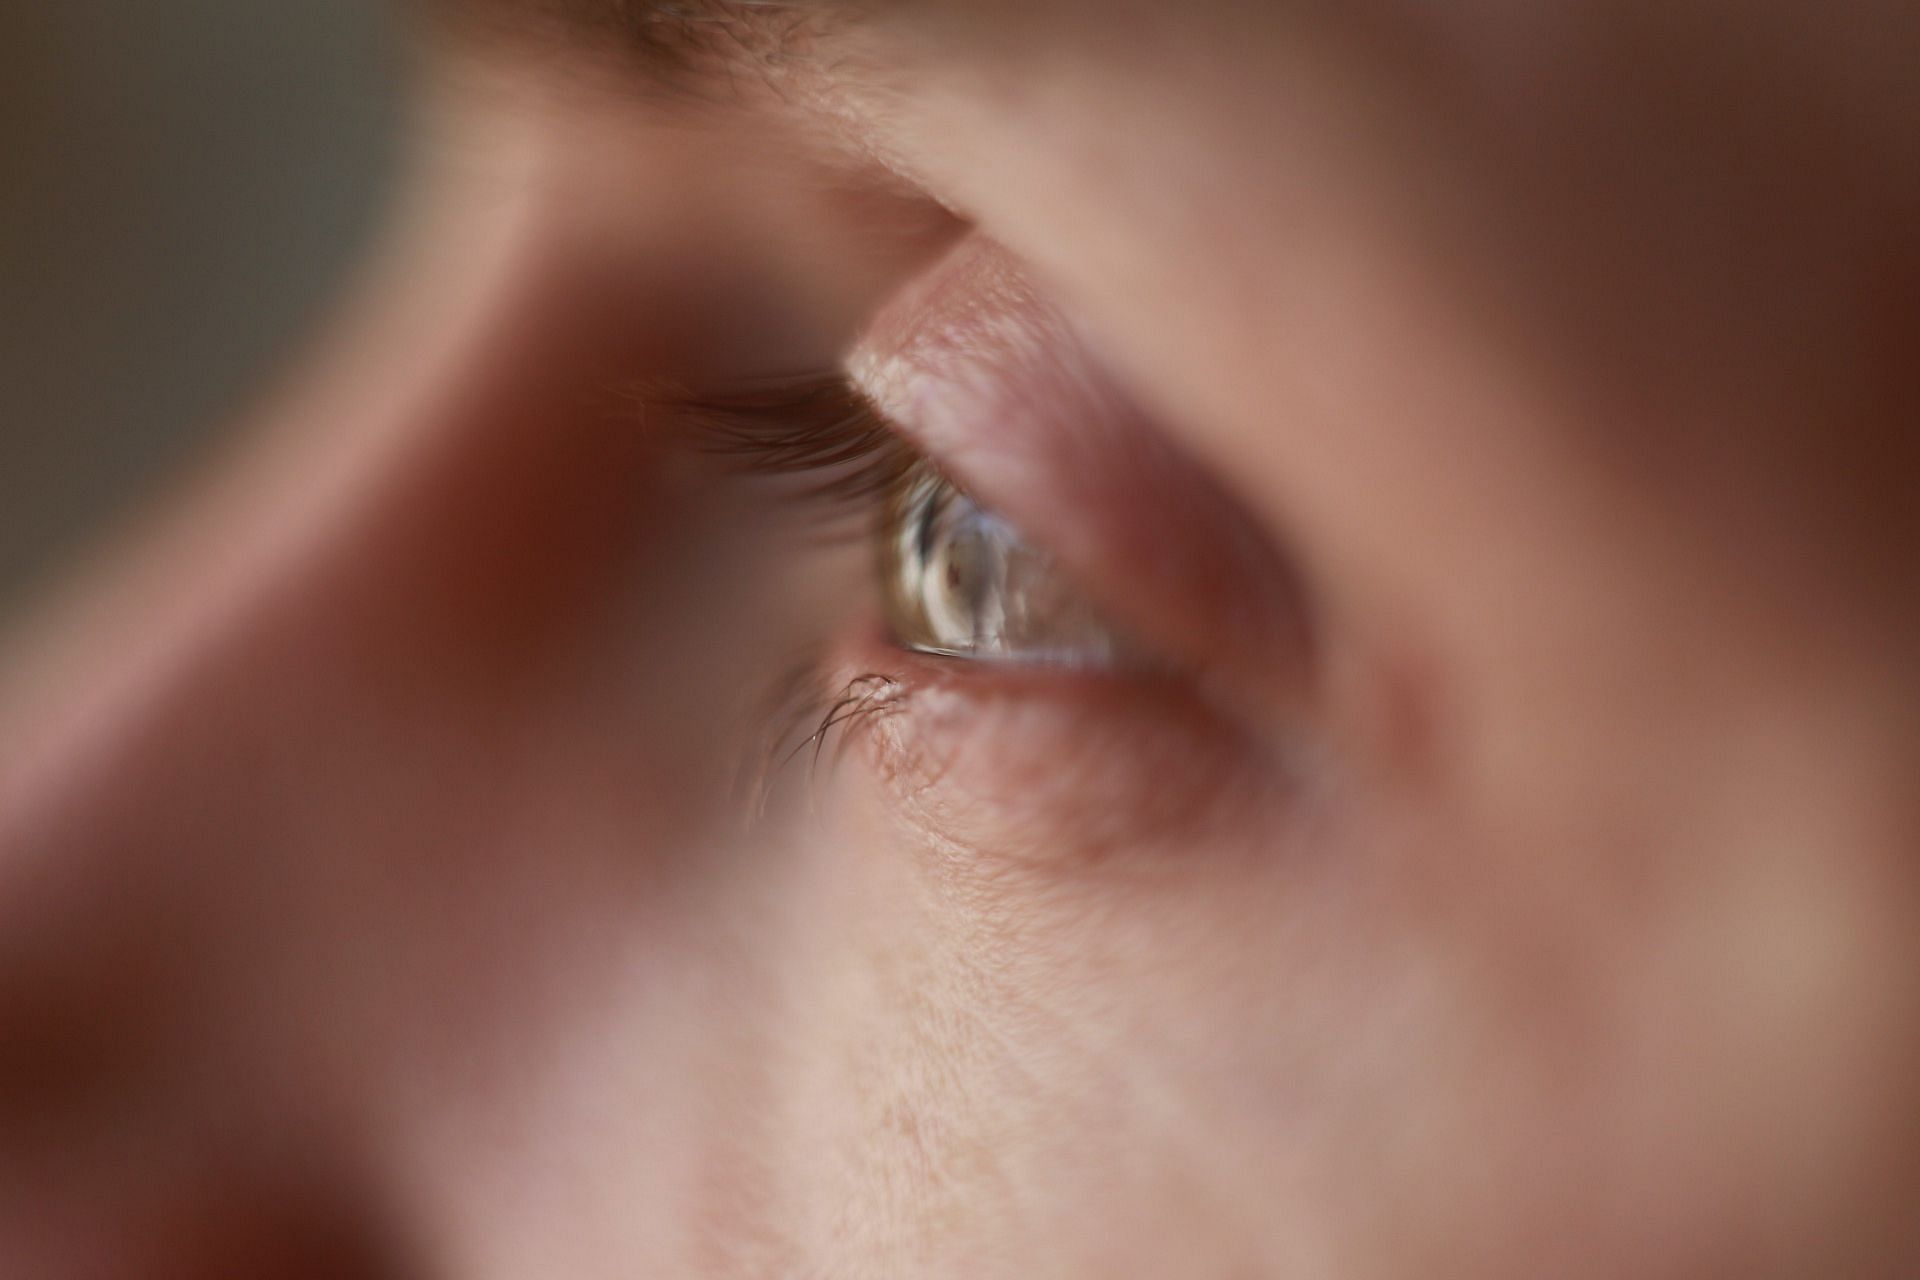 causes of rash around eyes (image sourced via Pexels / Photo by Victoria)